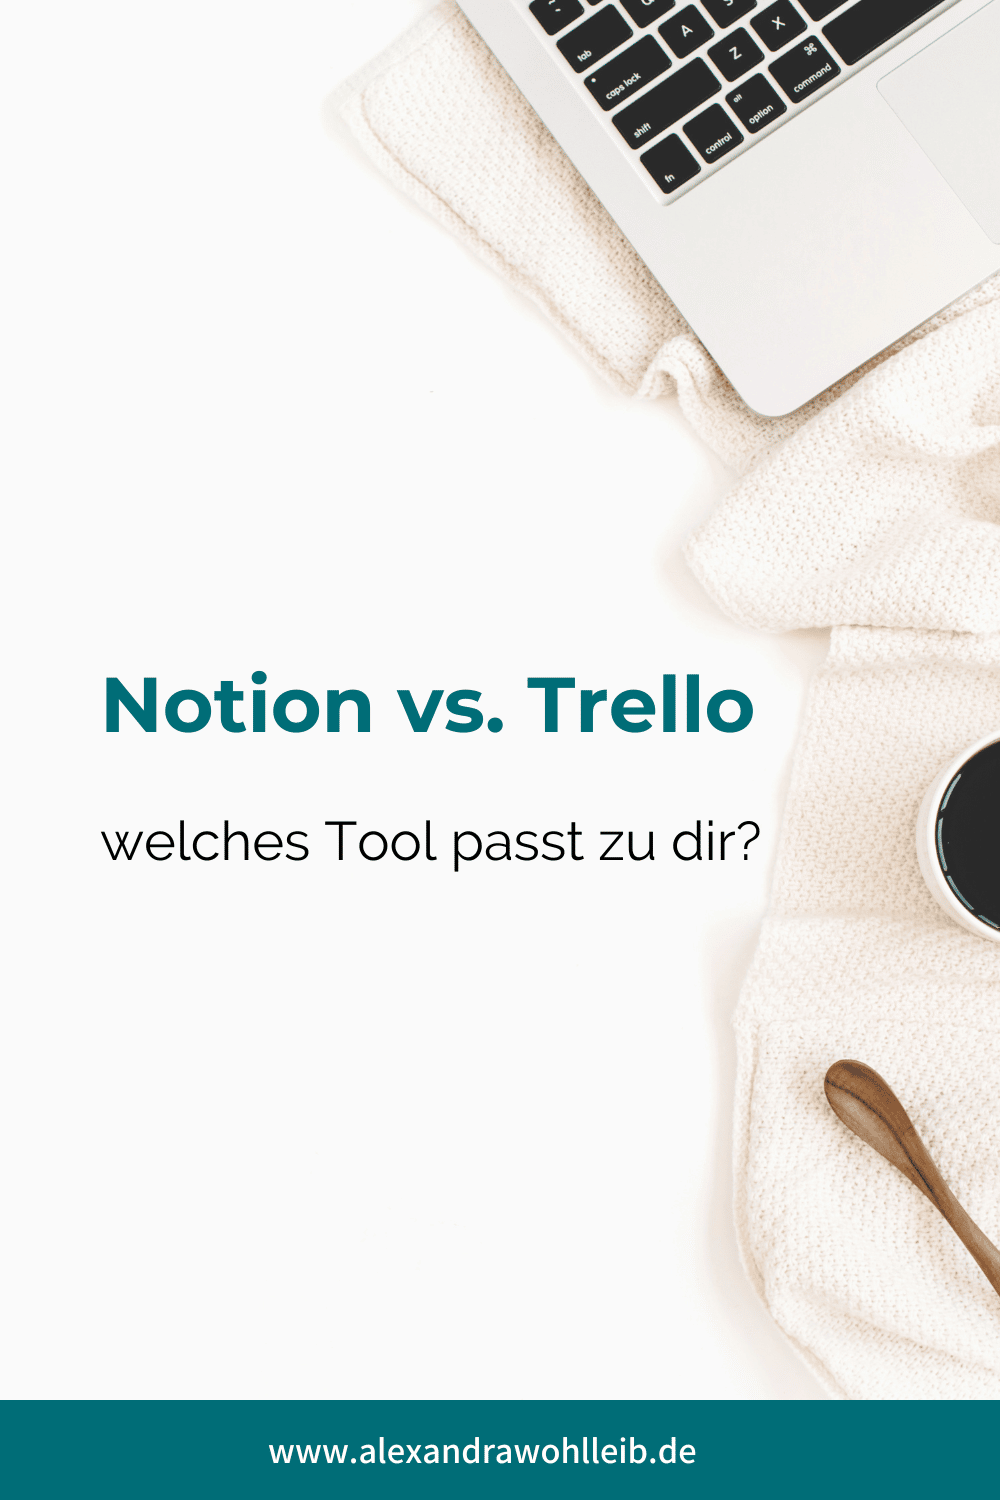 Notion vs. Trello